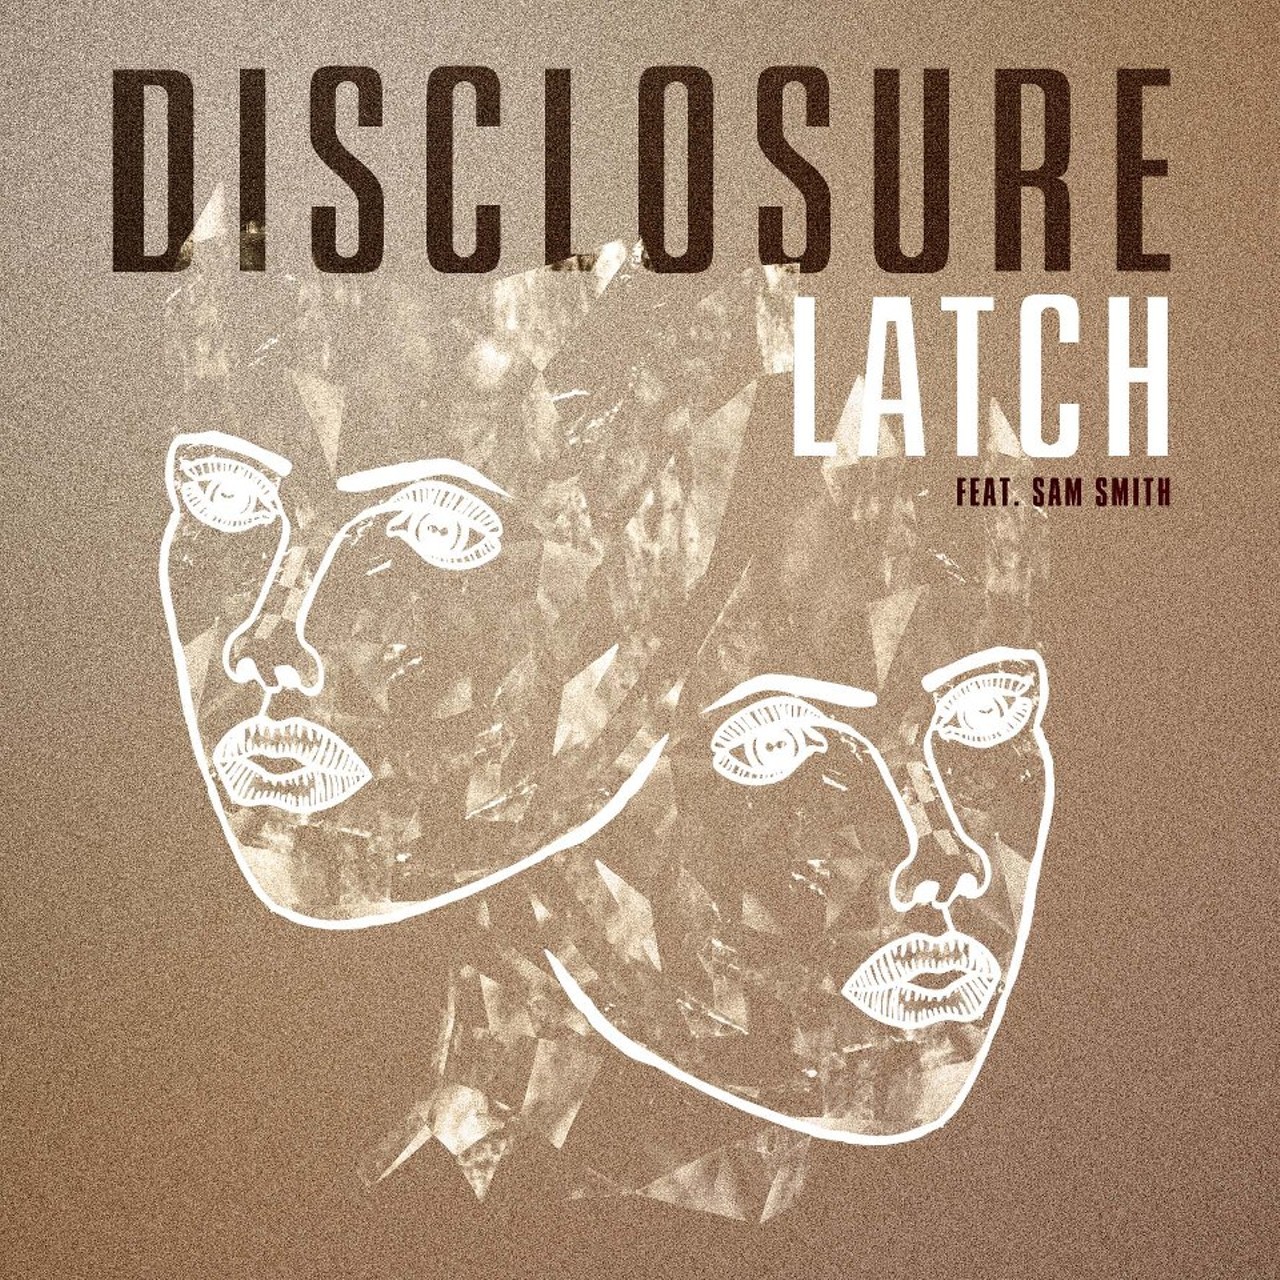 21. Disclosure (ft. Sam Smith), "Latch" (17 Votes)